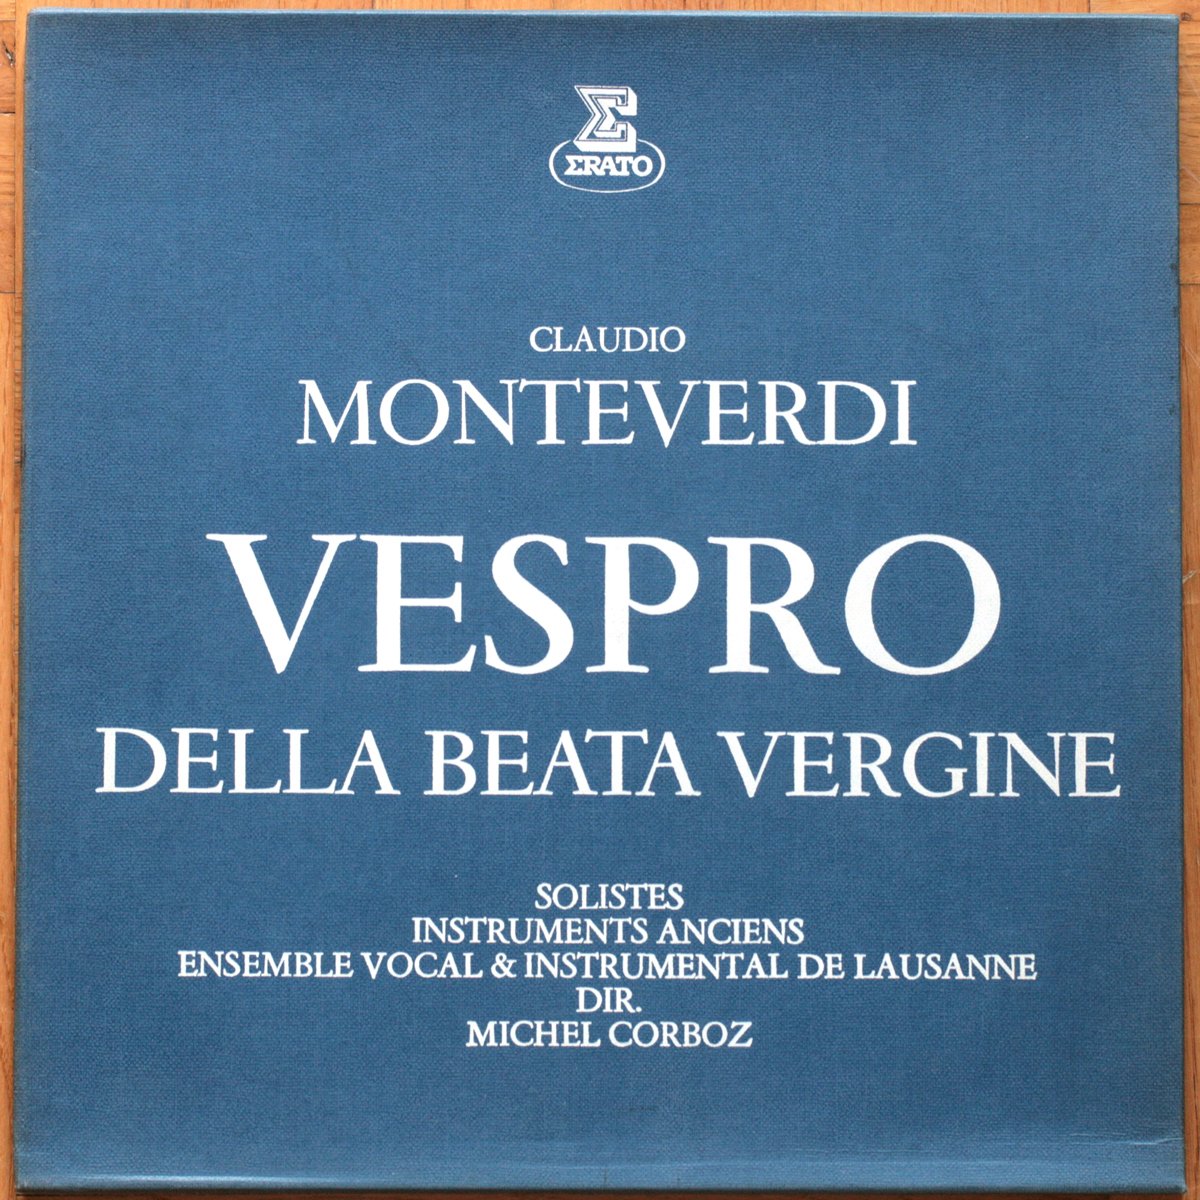 Monteverdi • Vespro Della Beata Vergine • Magnificat • Erato STU 70325/27 • Ensemble vocal et instrumental de Lausanne • Michel Corboz